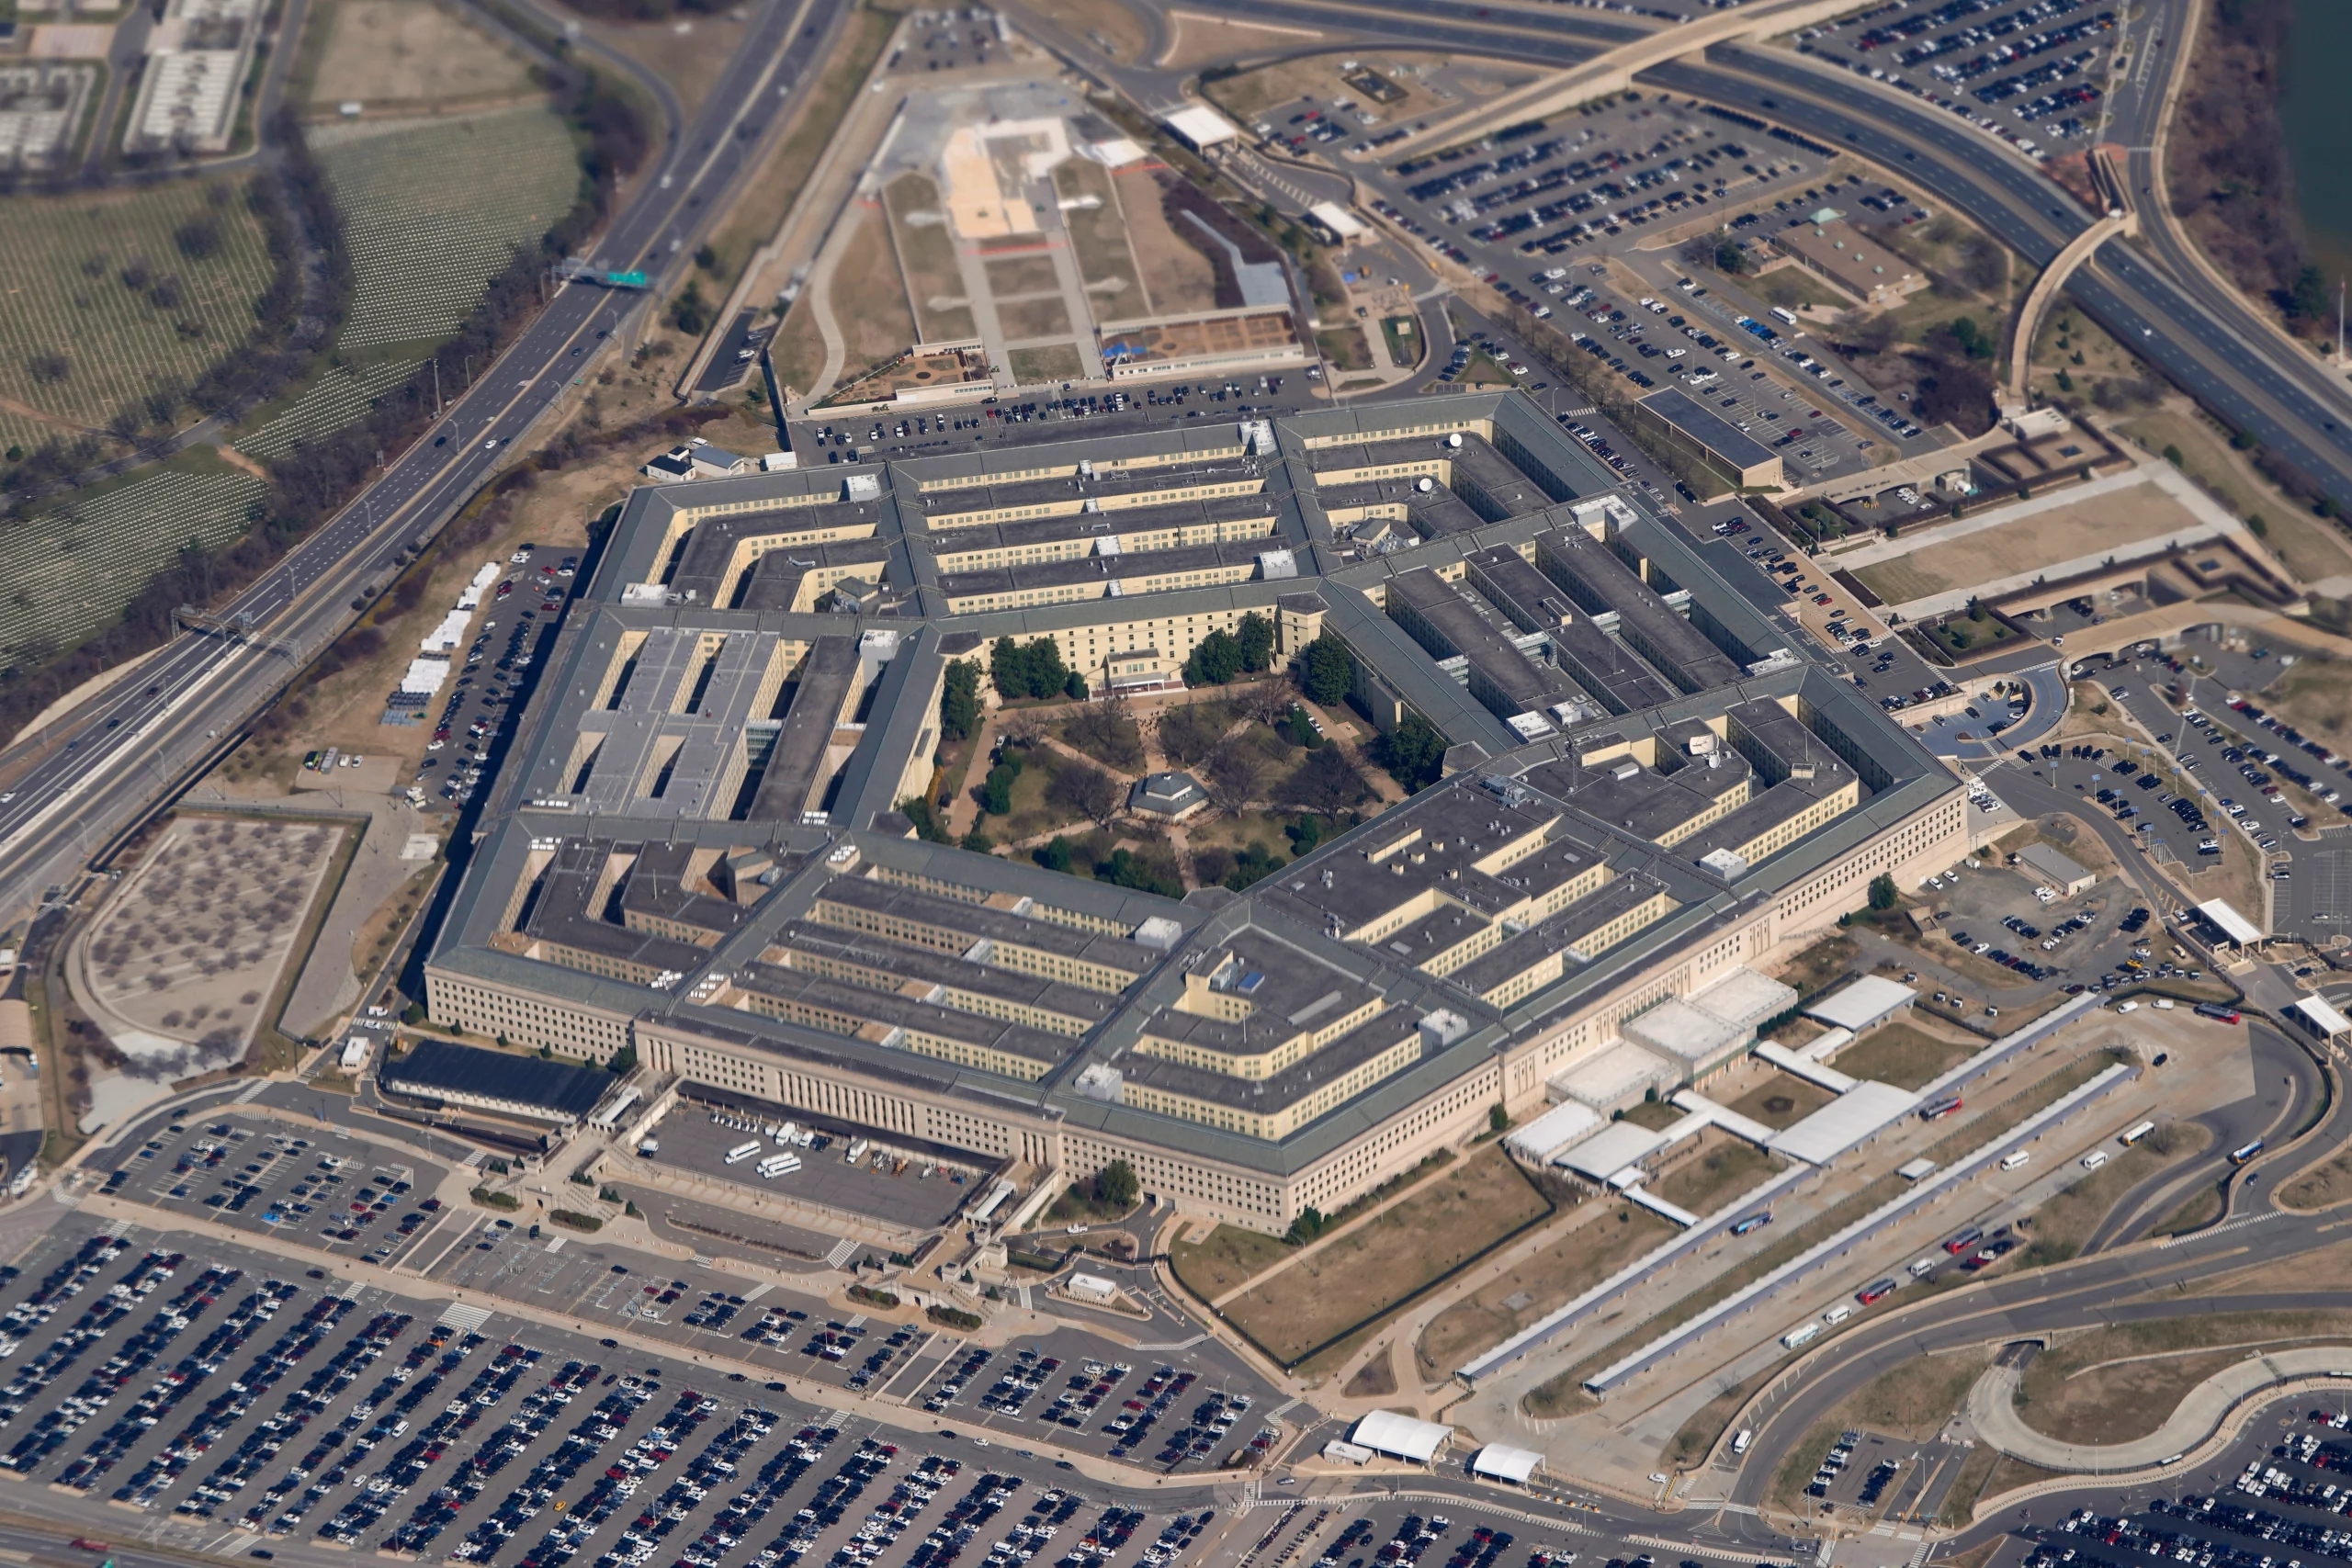 Pentagon denies secret UFO retrieval program after whistleblower bombshell